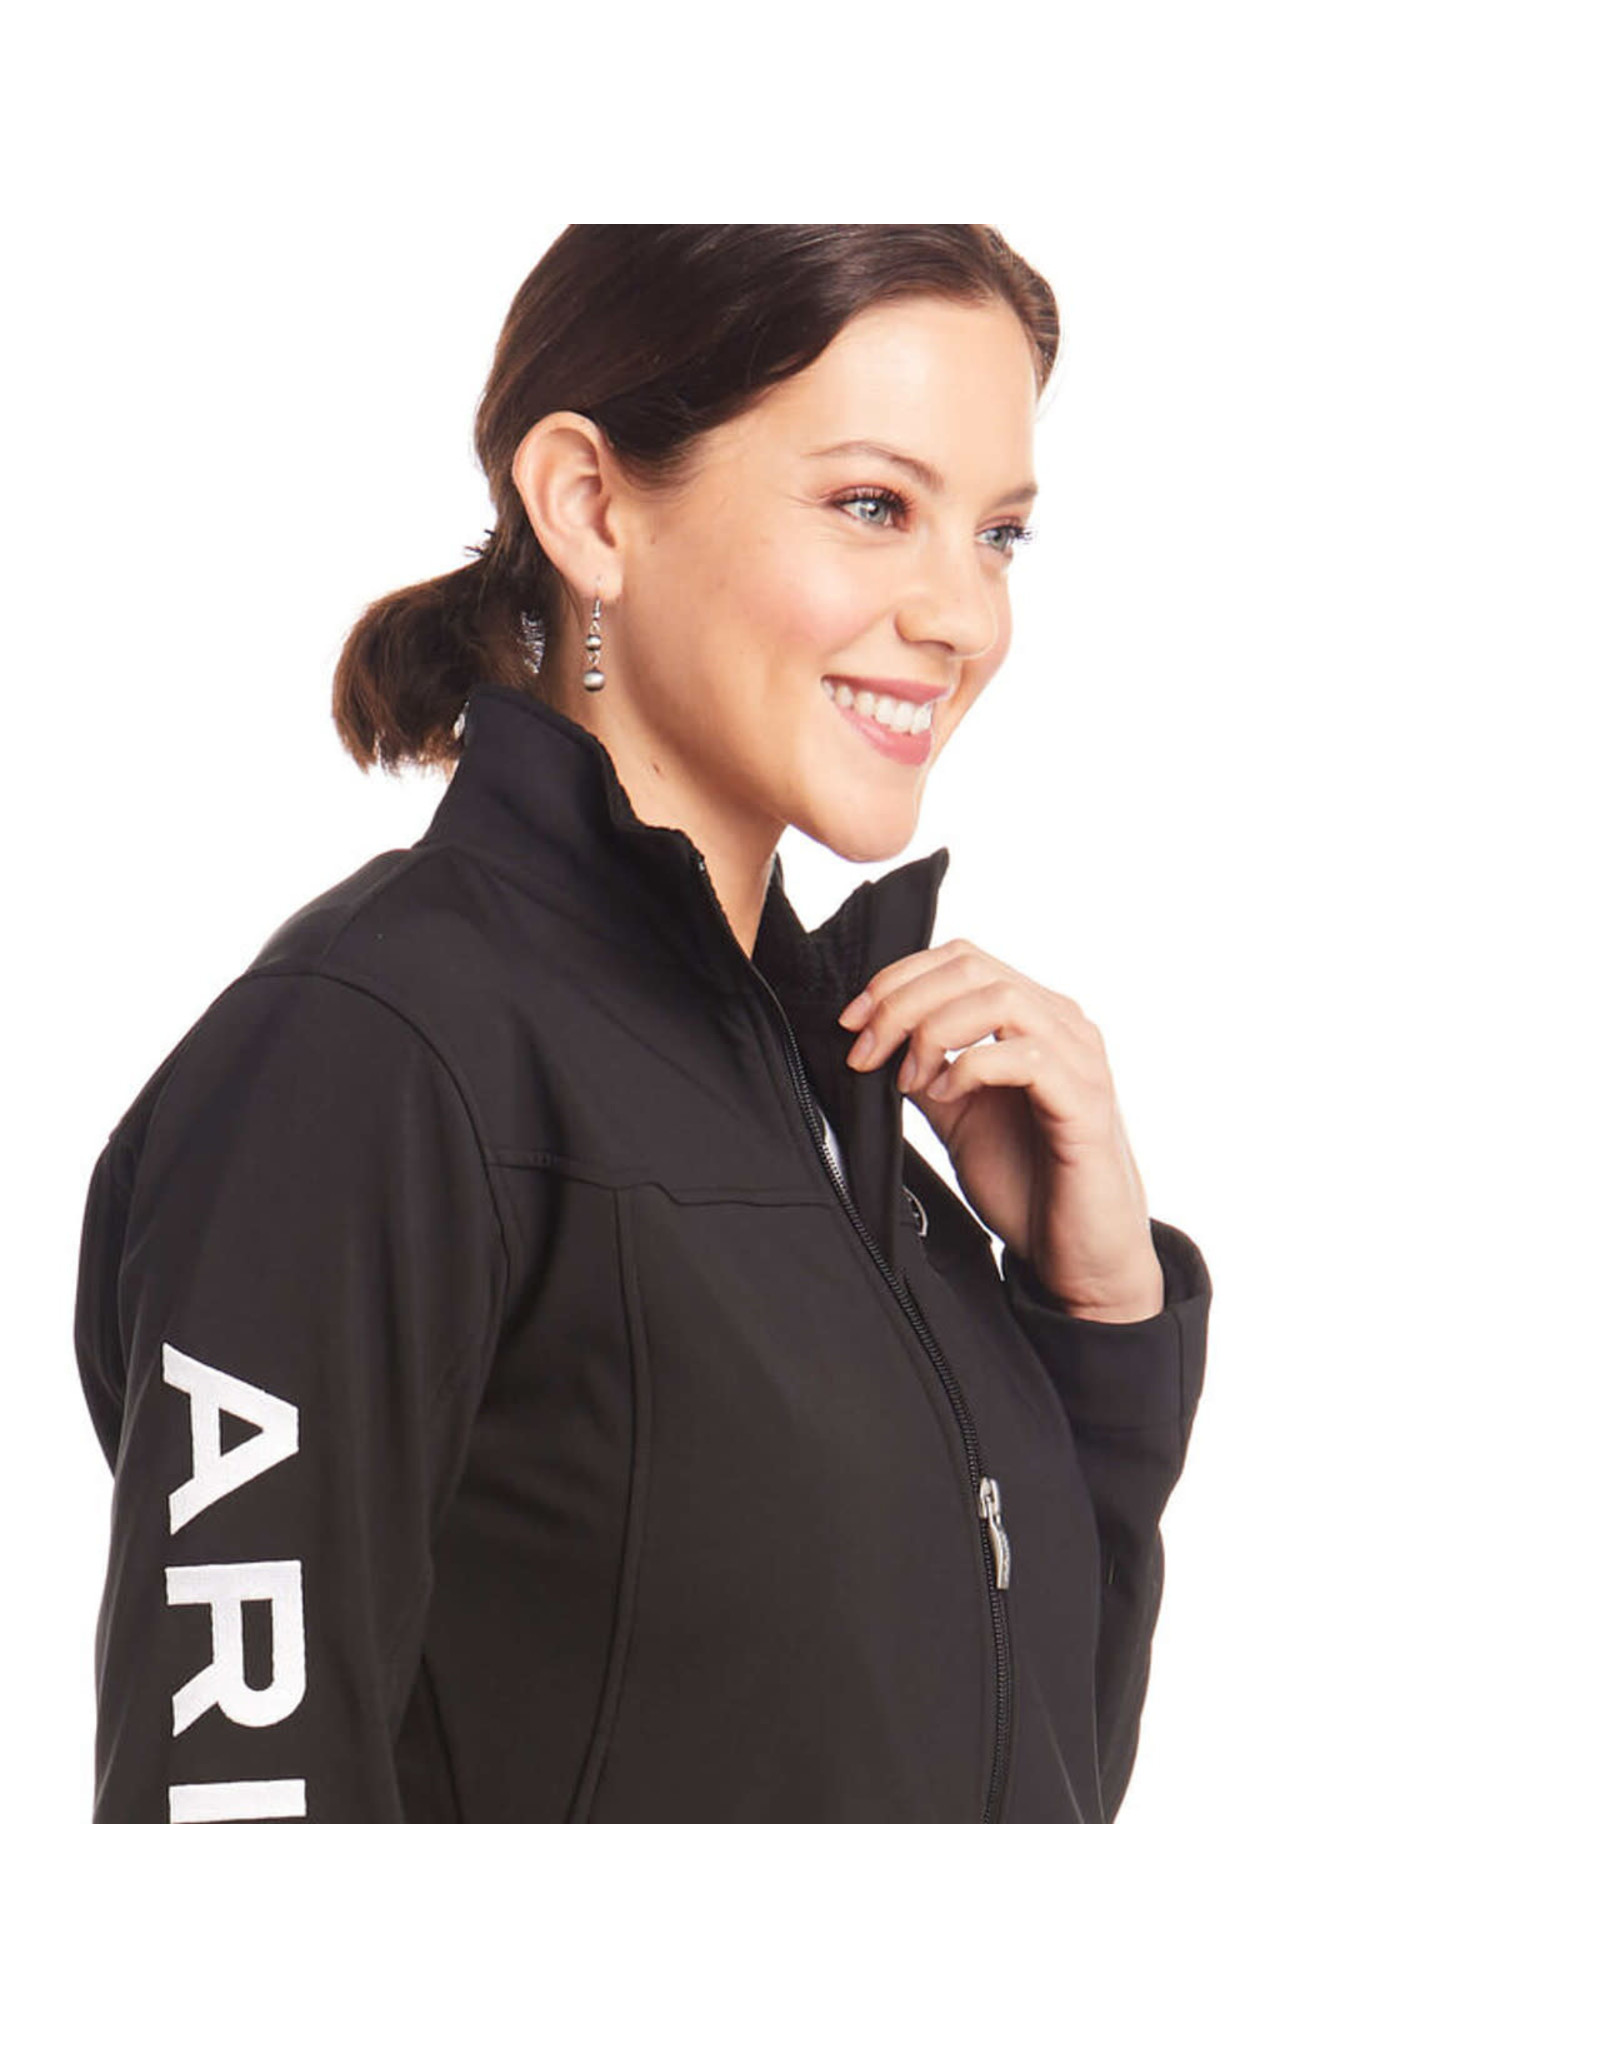 Ariat Ariat Ladies Black Team Softshell Jacket 10019206